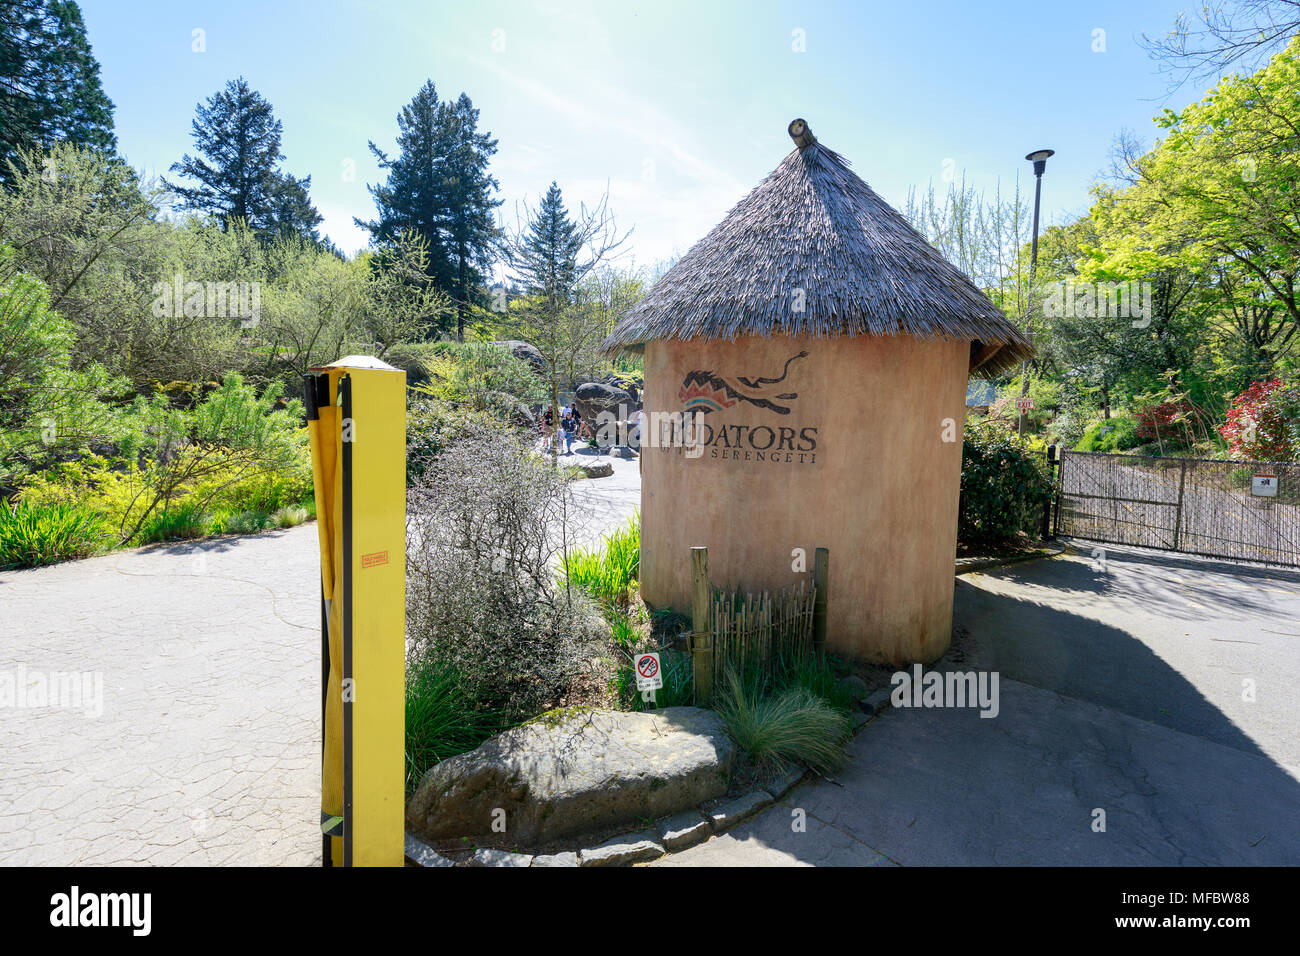 Portland, Oregon, USA - April 24, 2018 : Scenery of Oregon Zoo, which is located in Washington Park, Portland Stock Photo